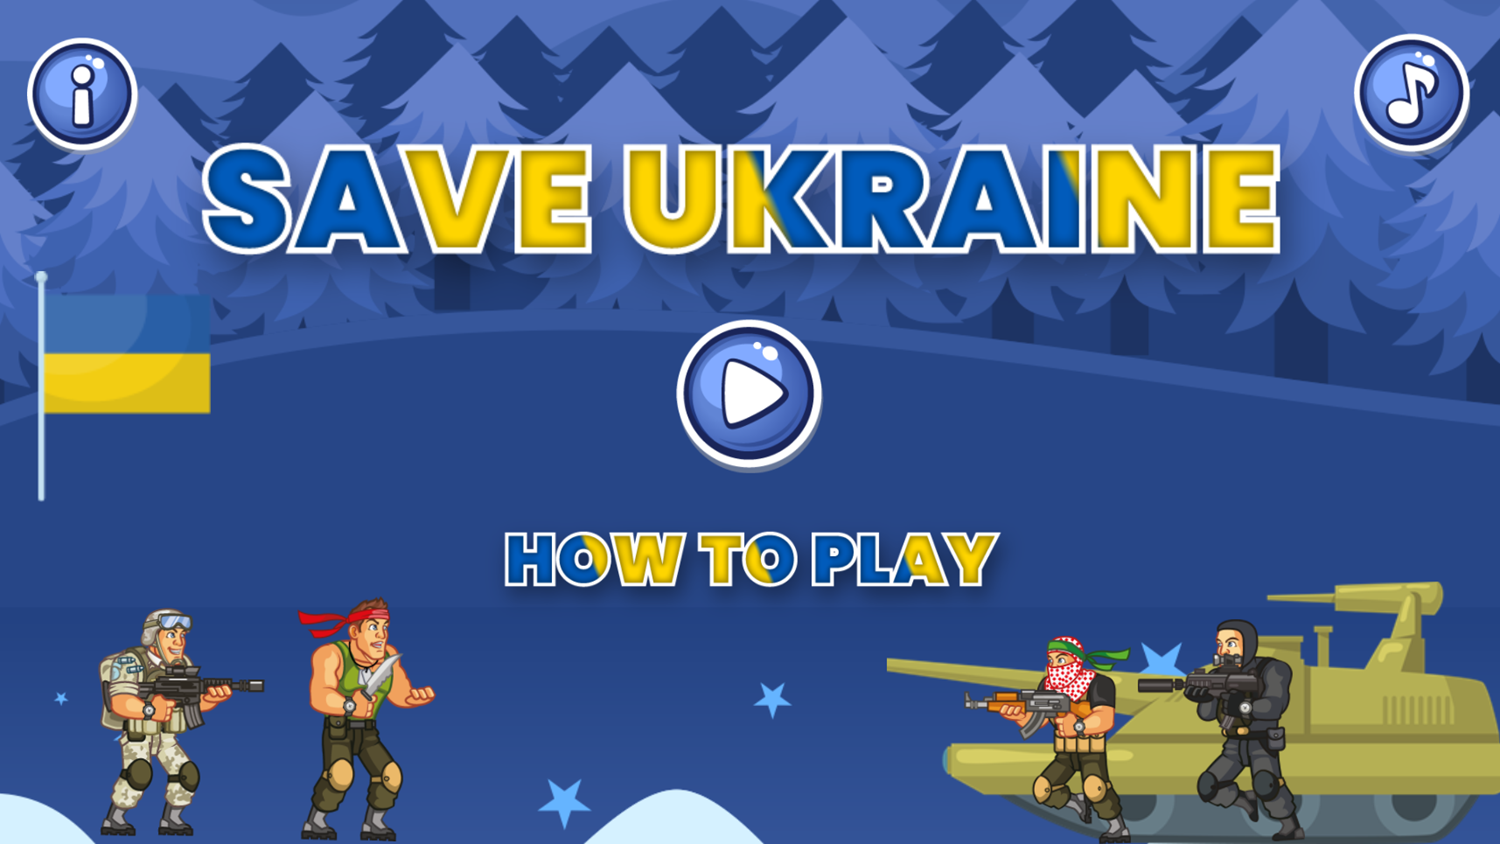 Save Ukraine Game Welcome Screen Screenshot.